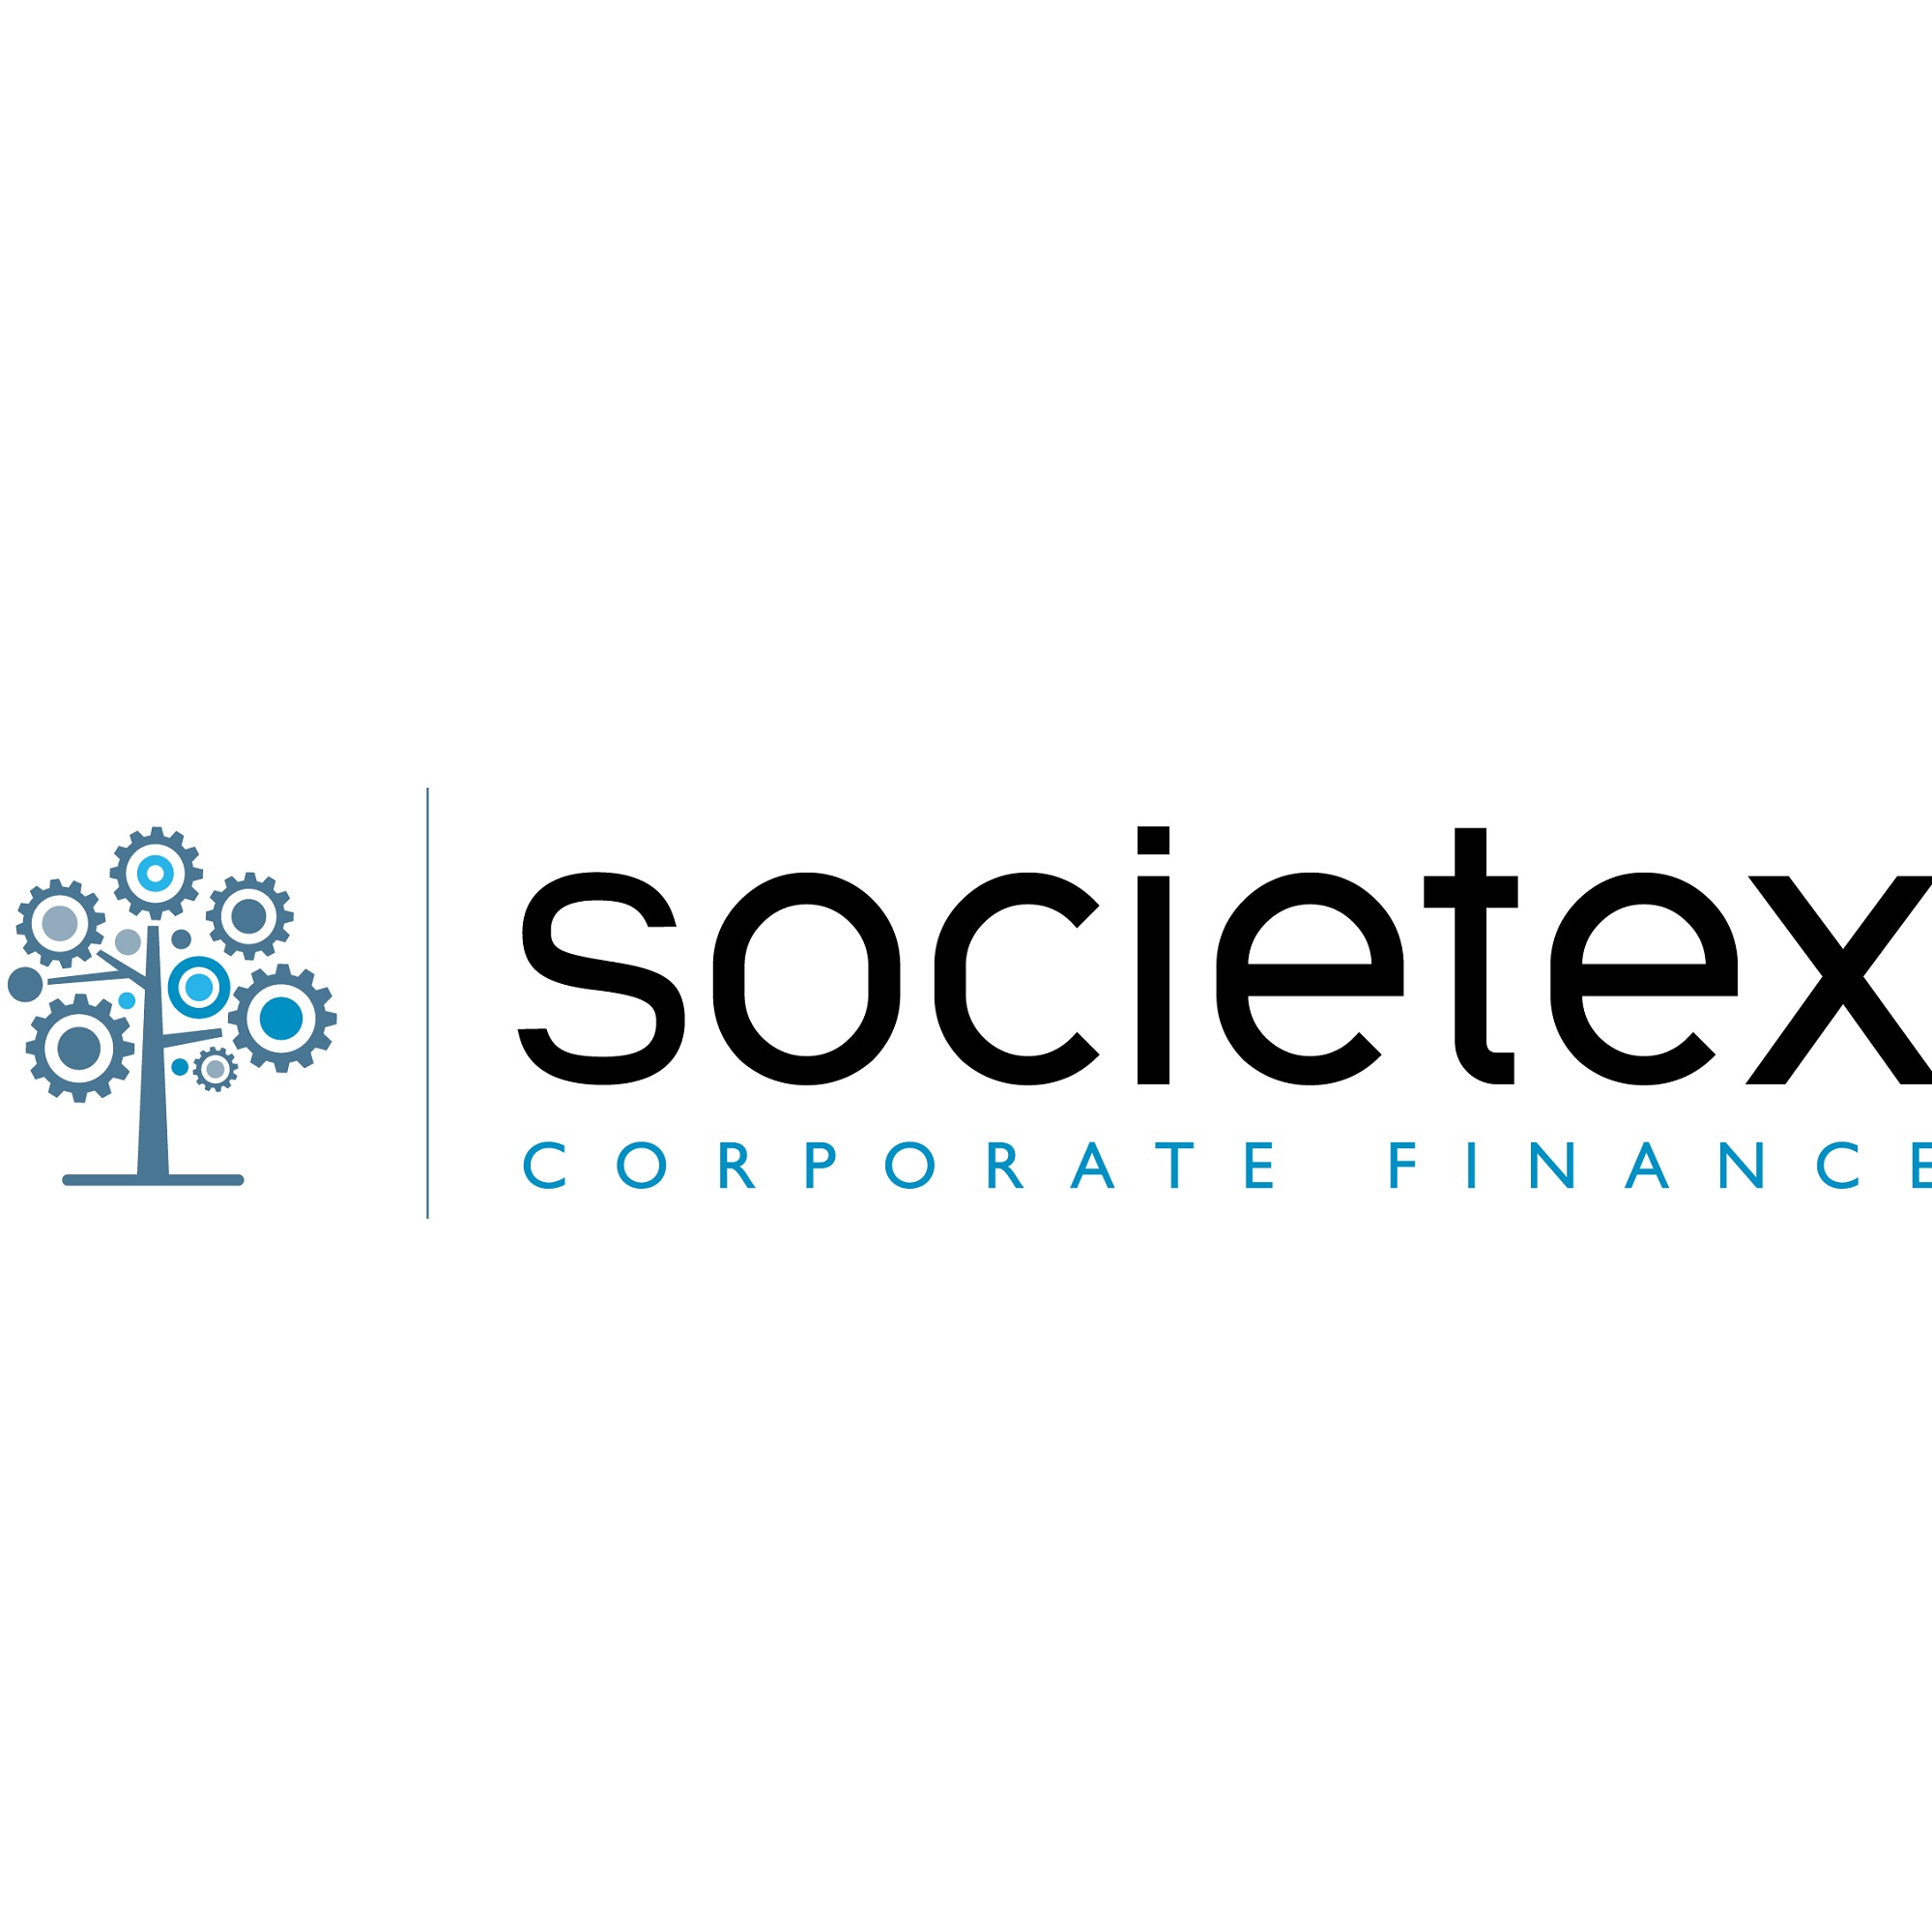 Societex Corporate Finance